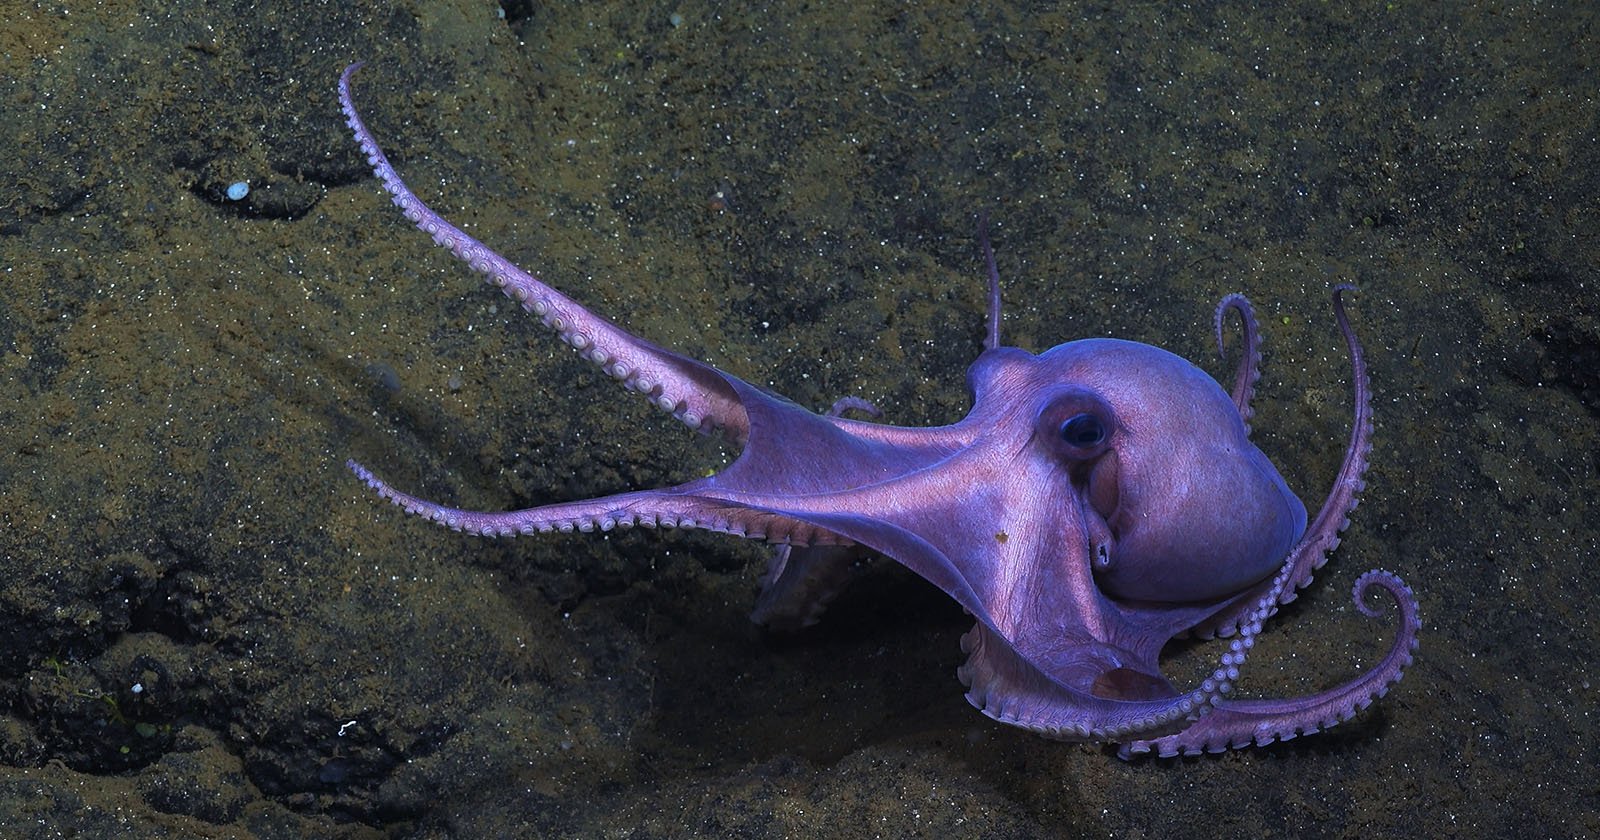  how secrets octopus shows beauty intelligence 